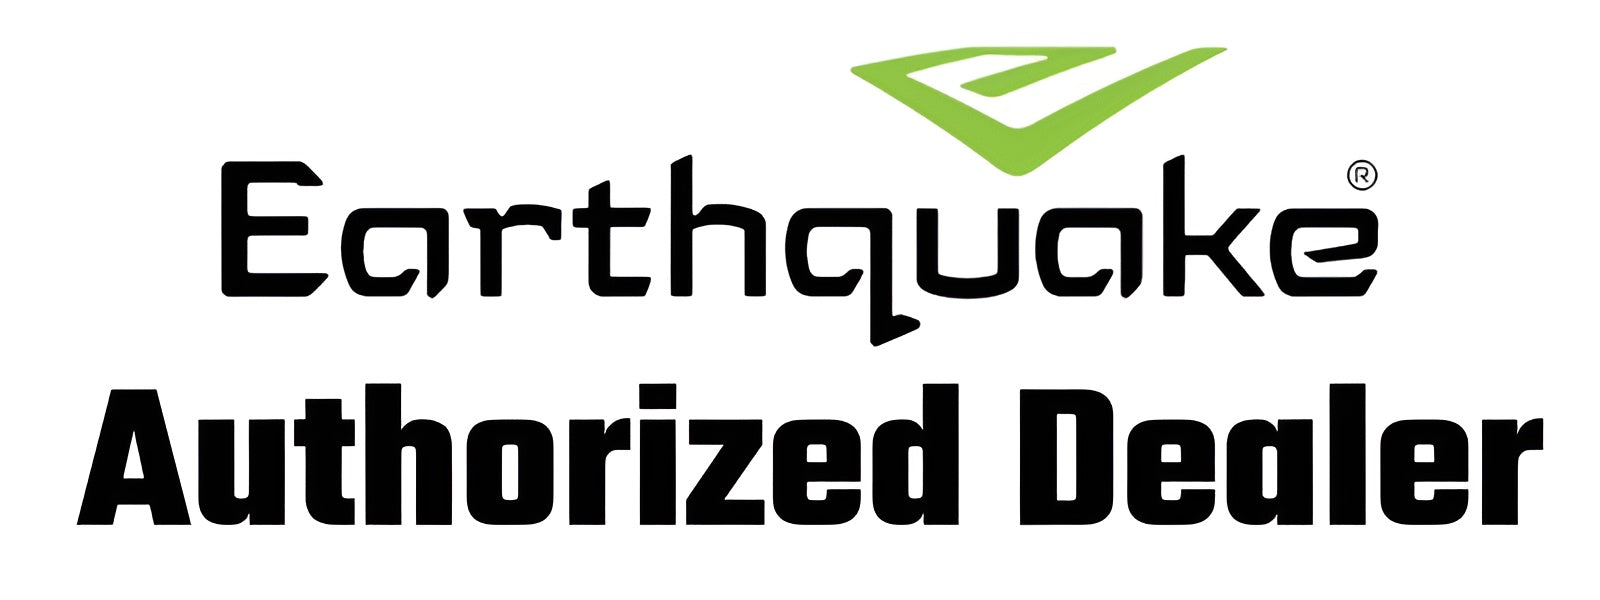 Earthquake Authorized Dealer Badge